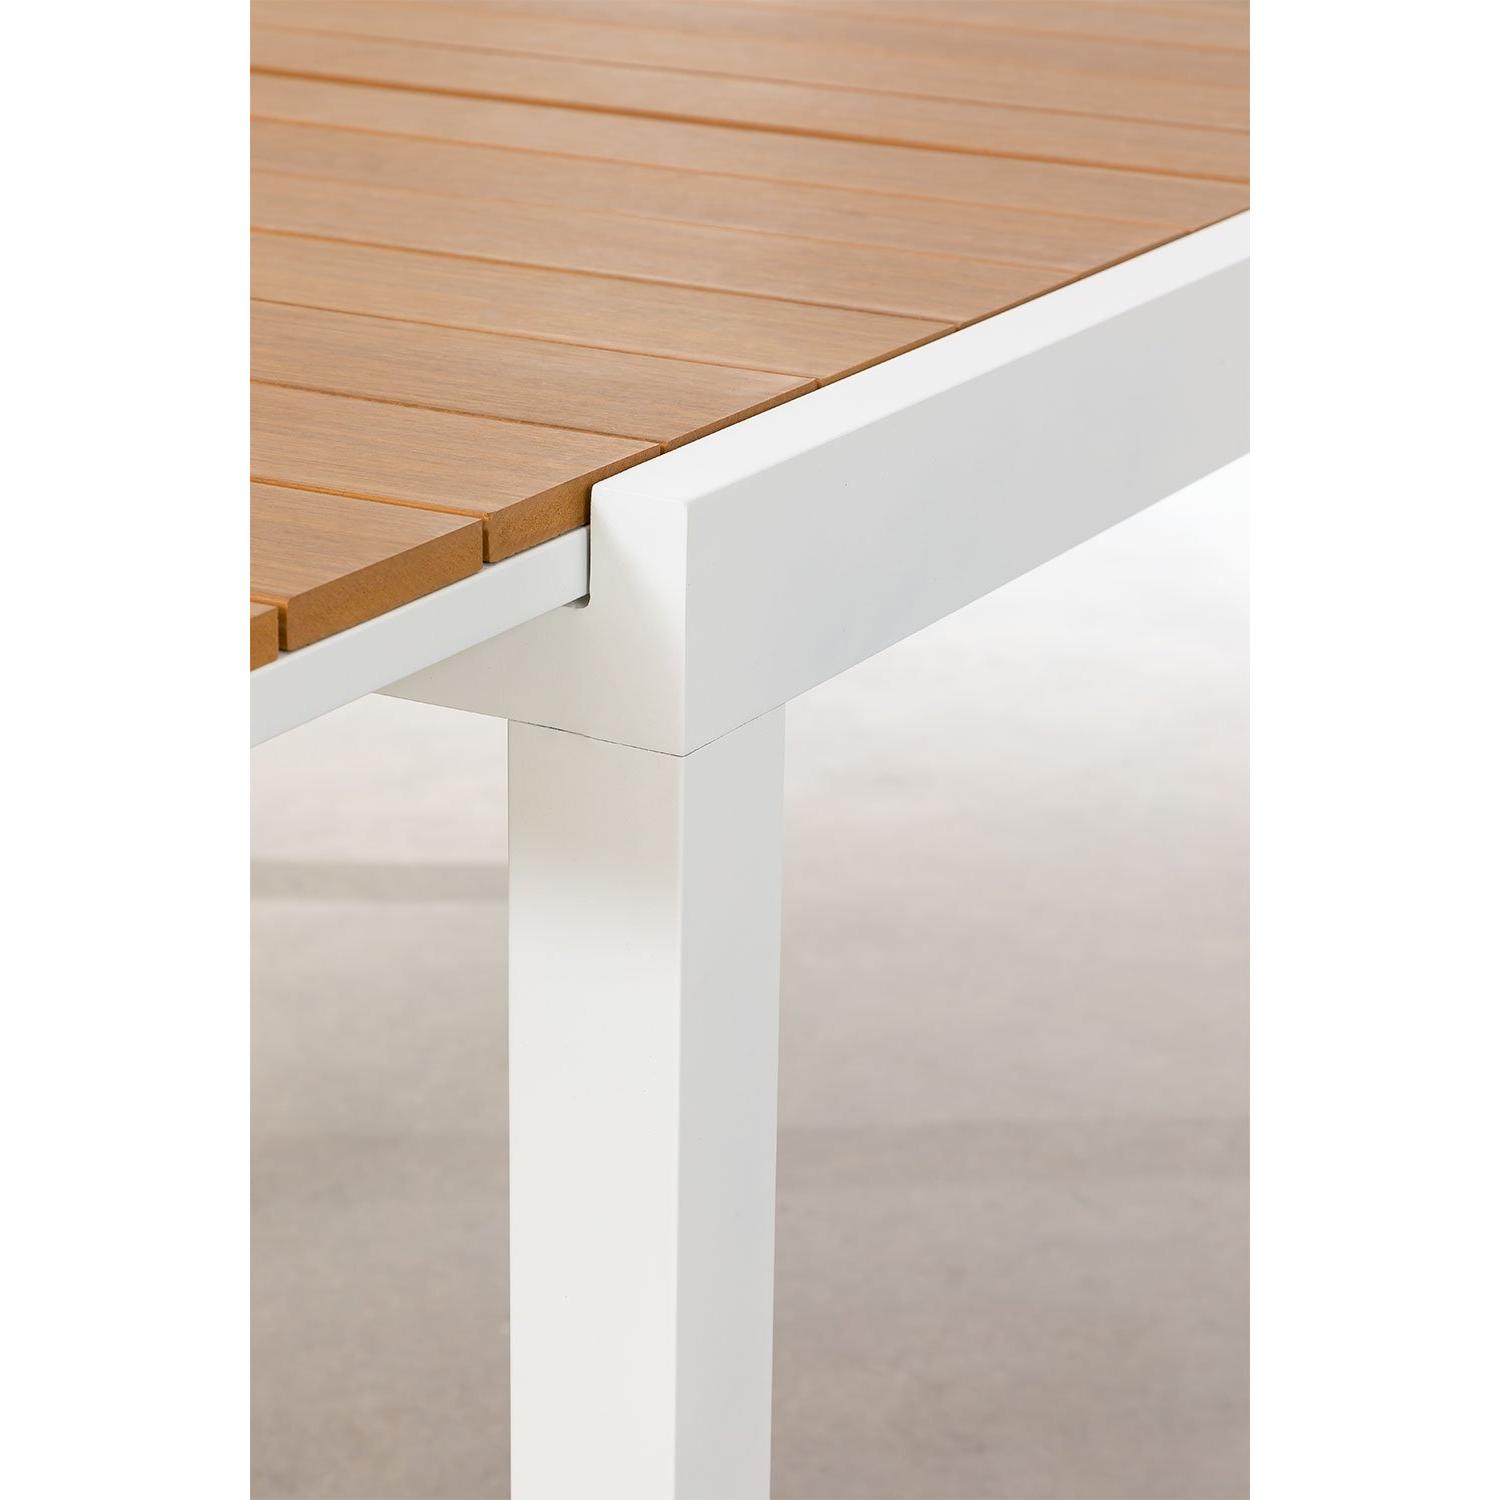 Lauko stalas SAURA, prailginamas, aliuminis, balta spalva, 150-197x90 cm